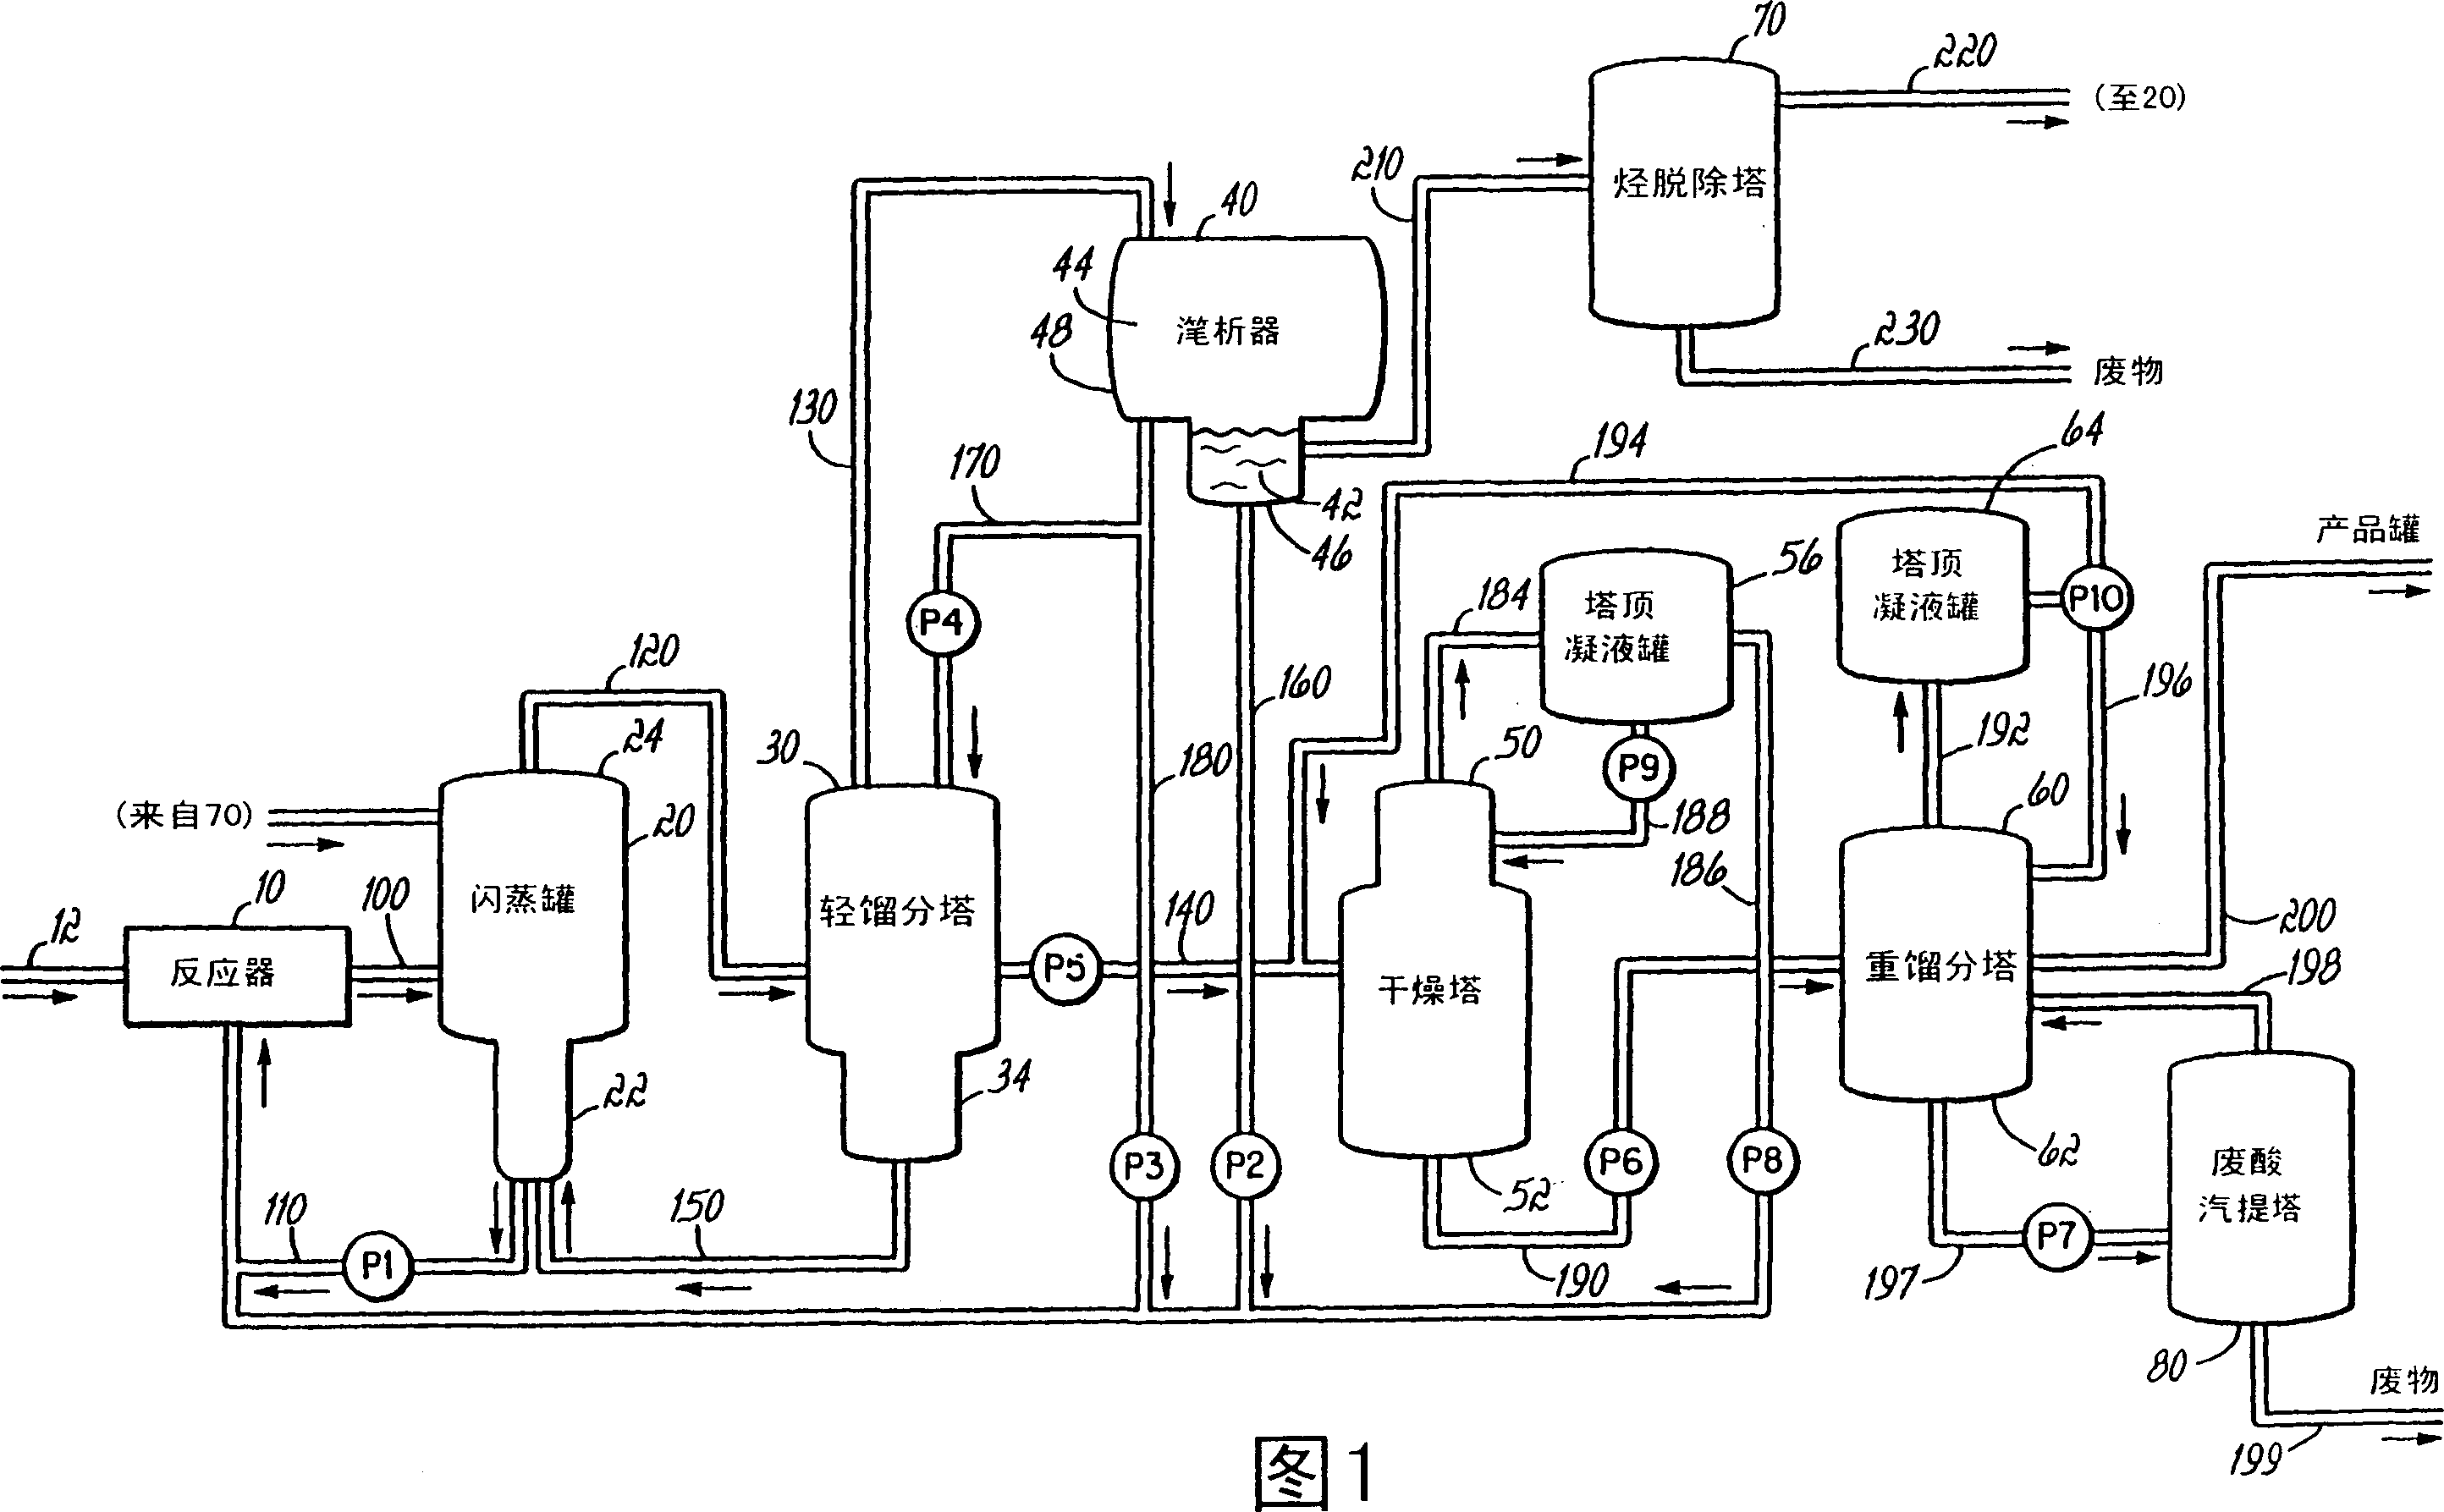 Process control for acetic acid manufacture